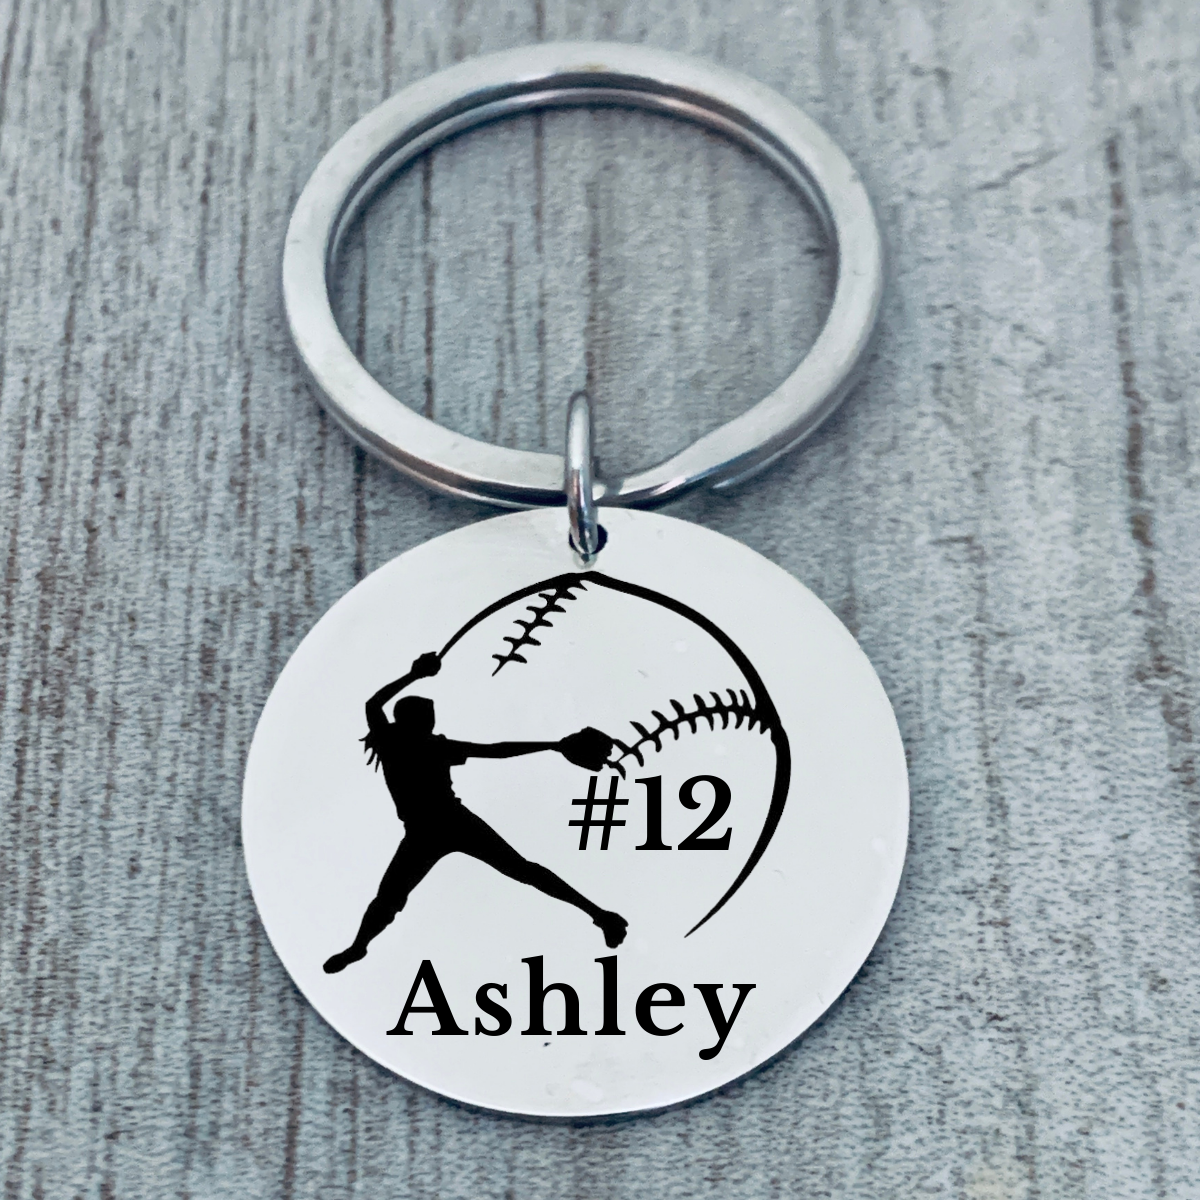 Personalized Softball Pitcher Keychain